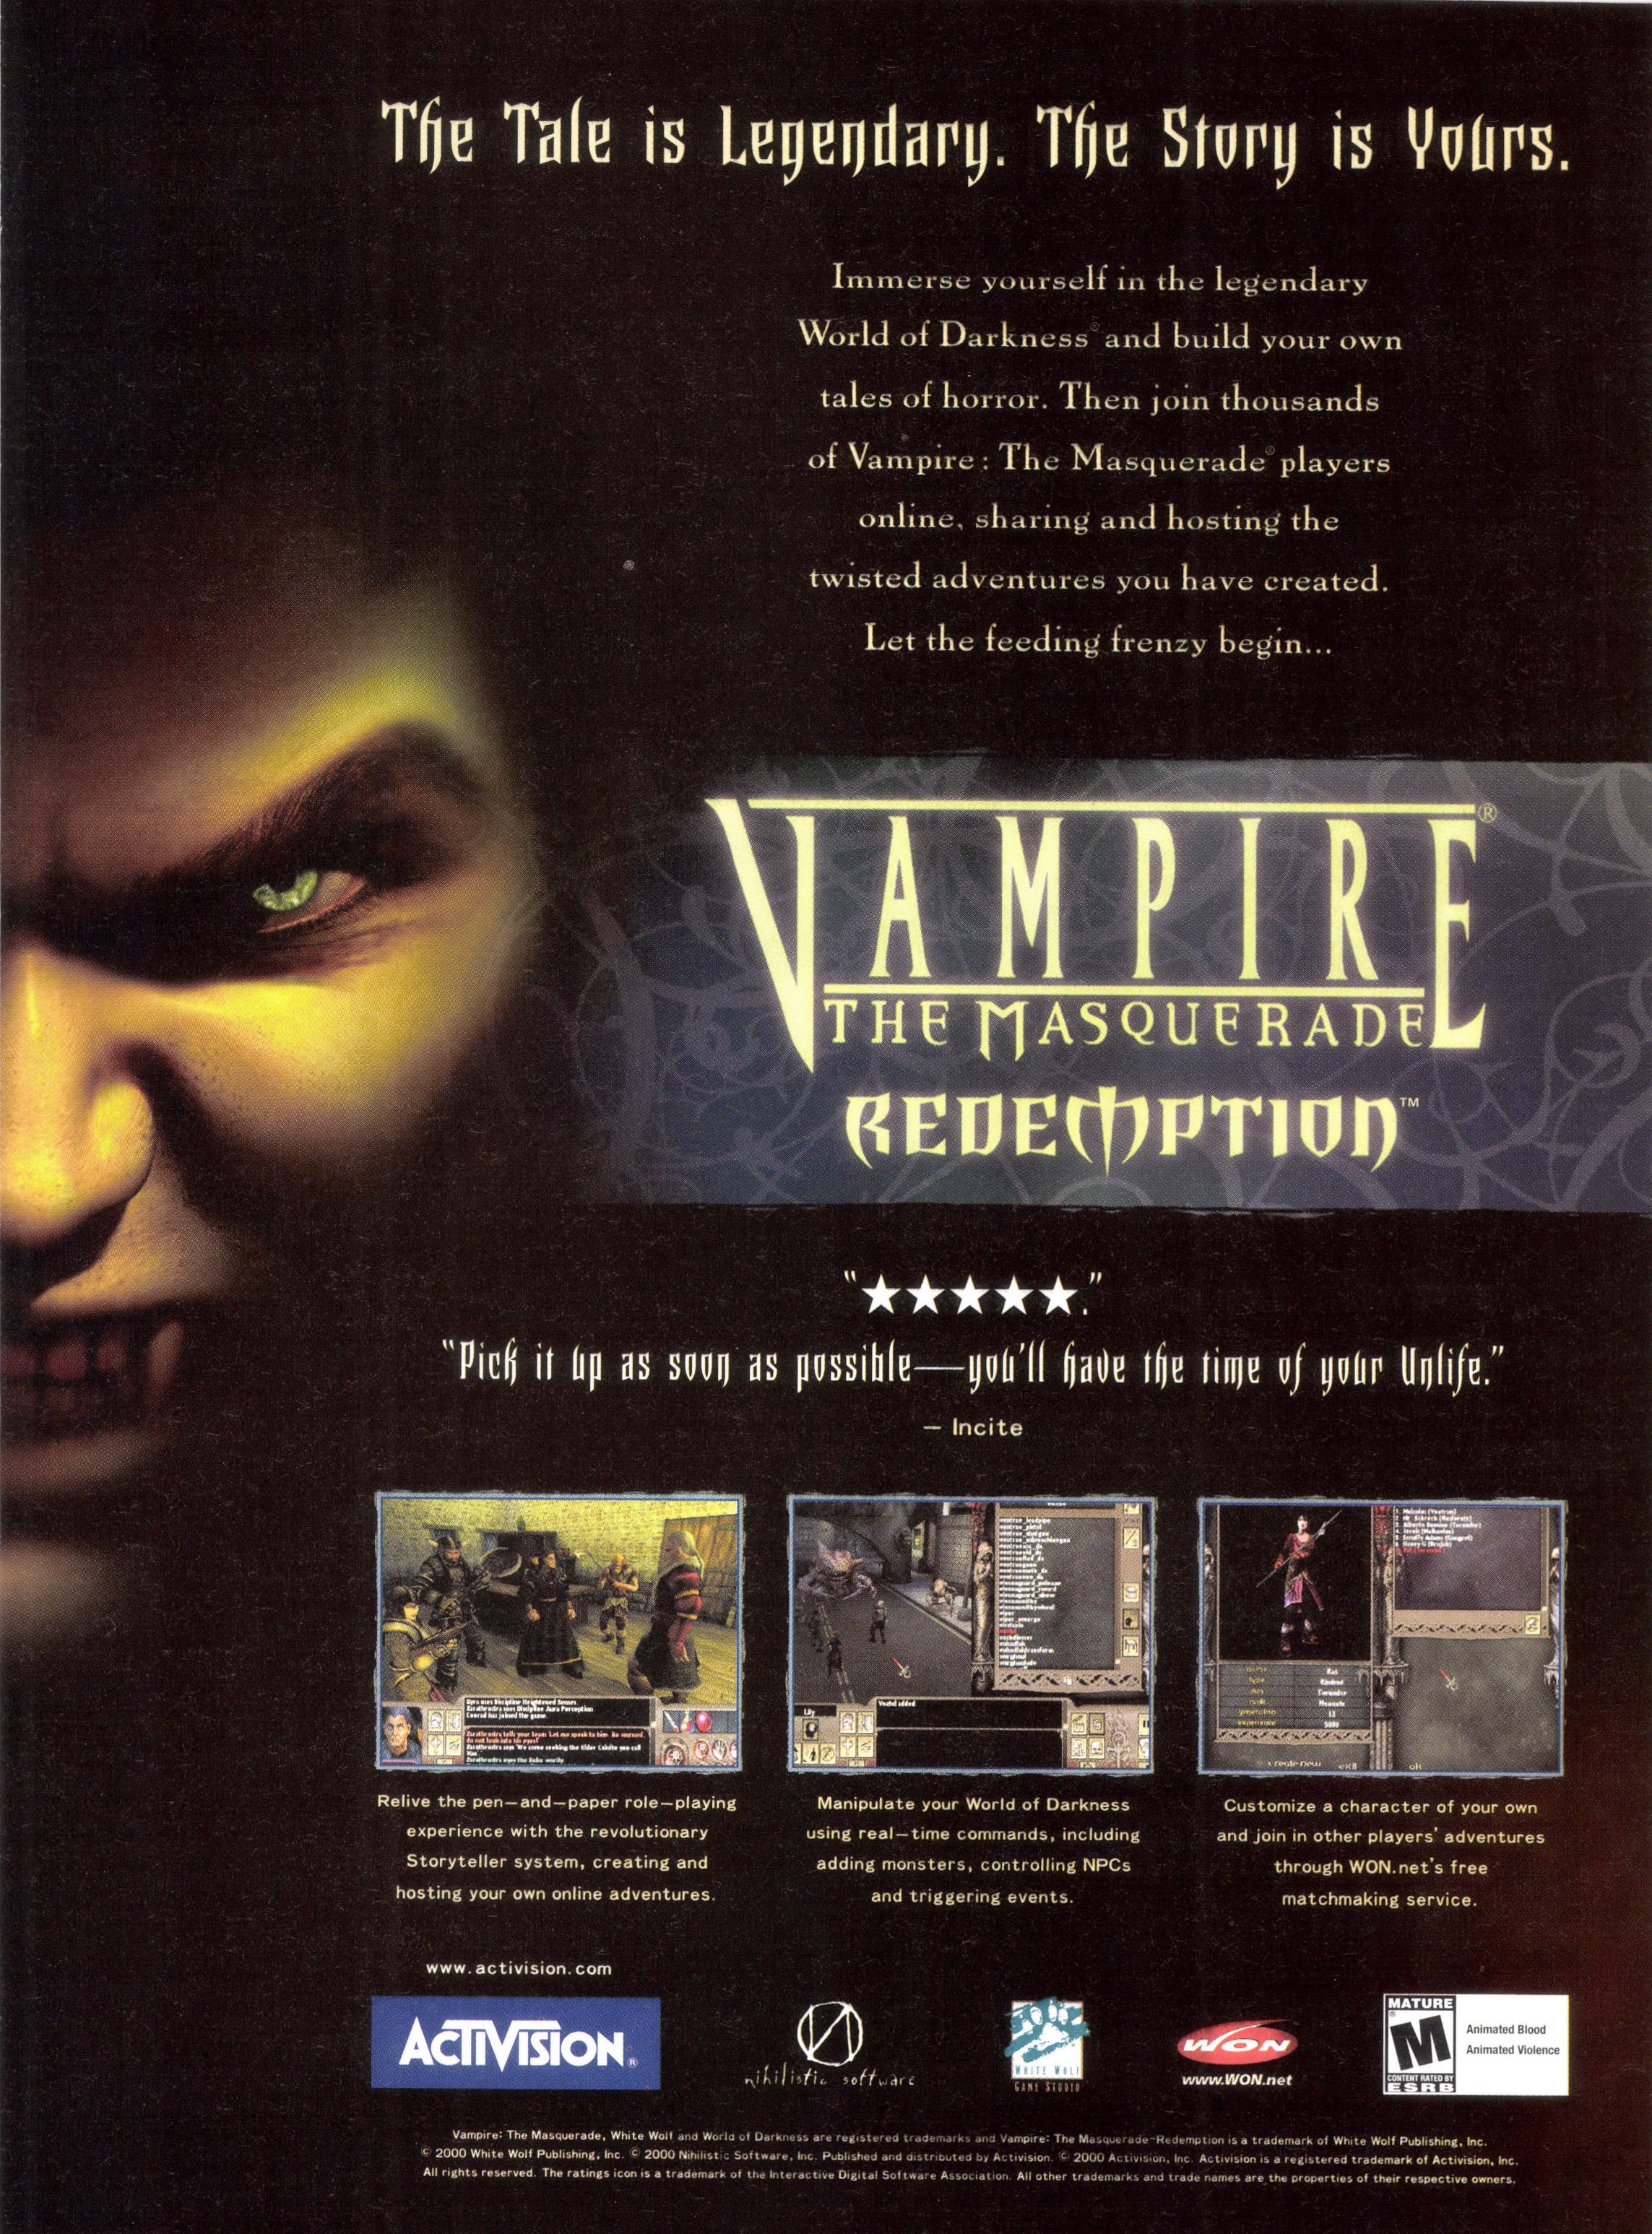 Vampire: The Masquerade - Redemption (2000)